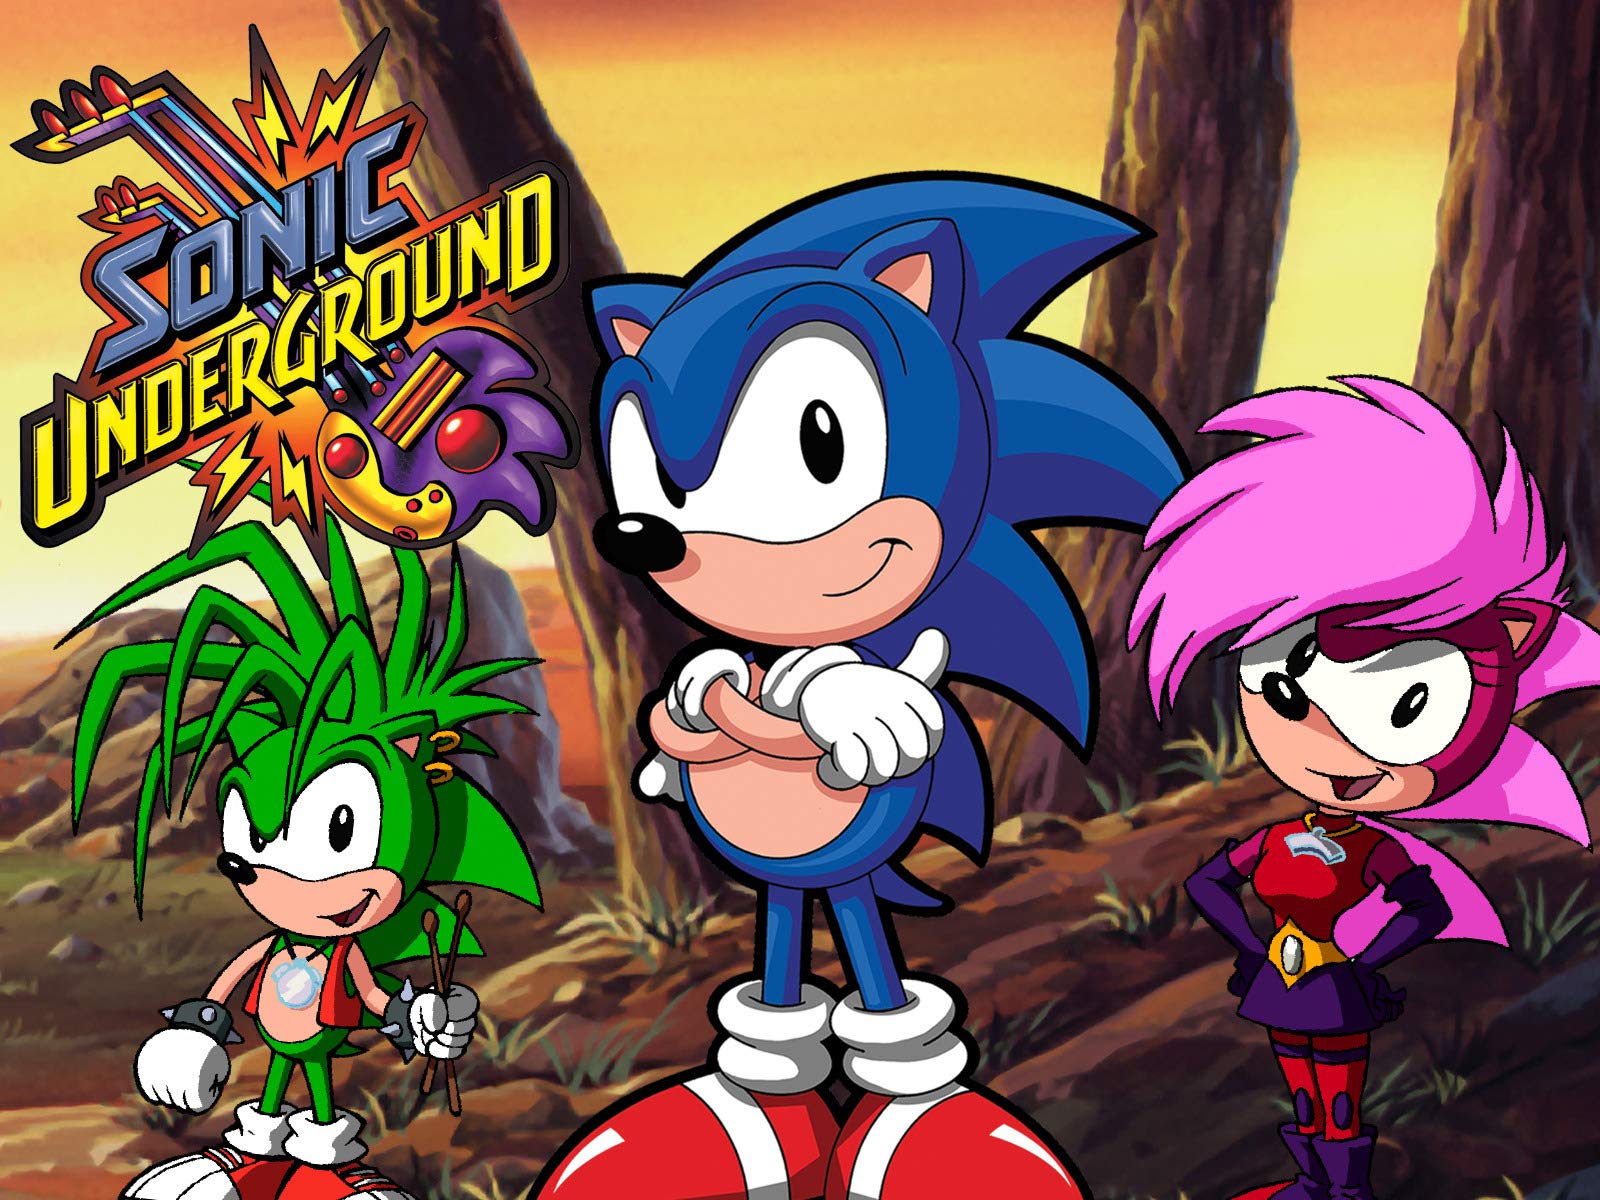 Serie de dibujos animados de Sonic Underground Gratis en español